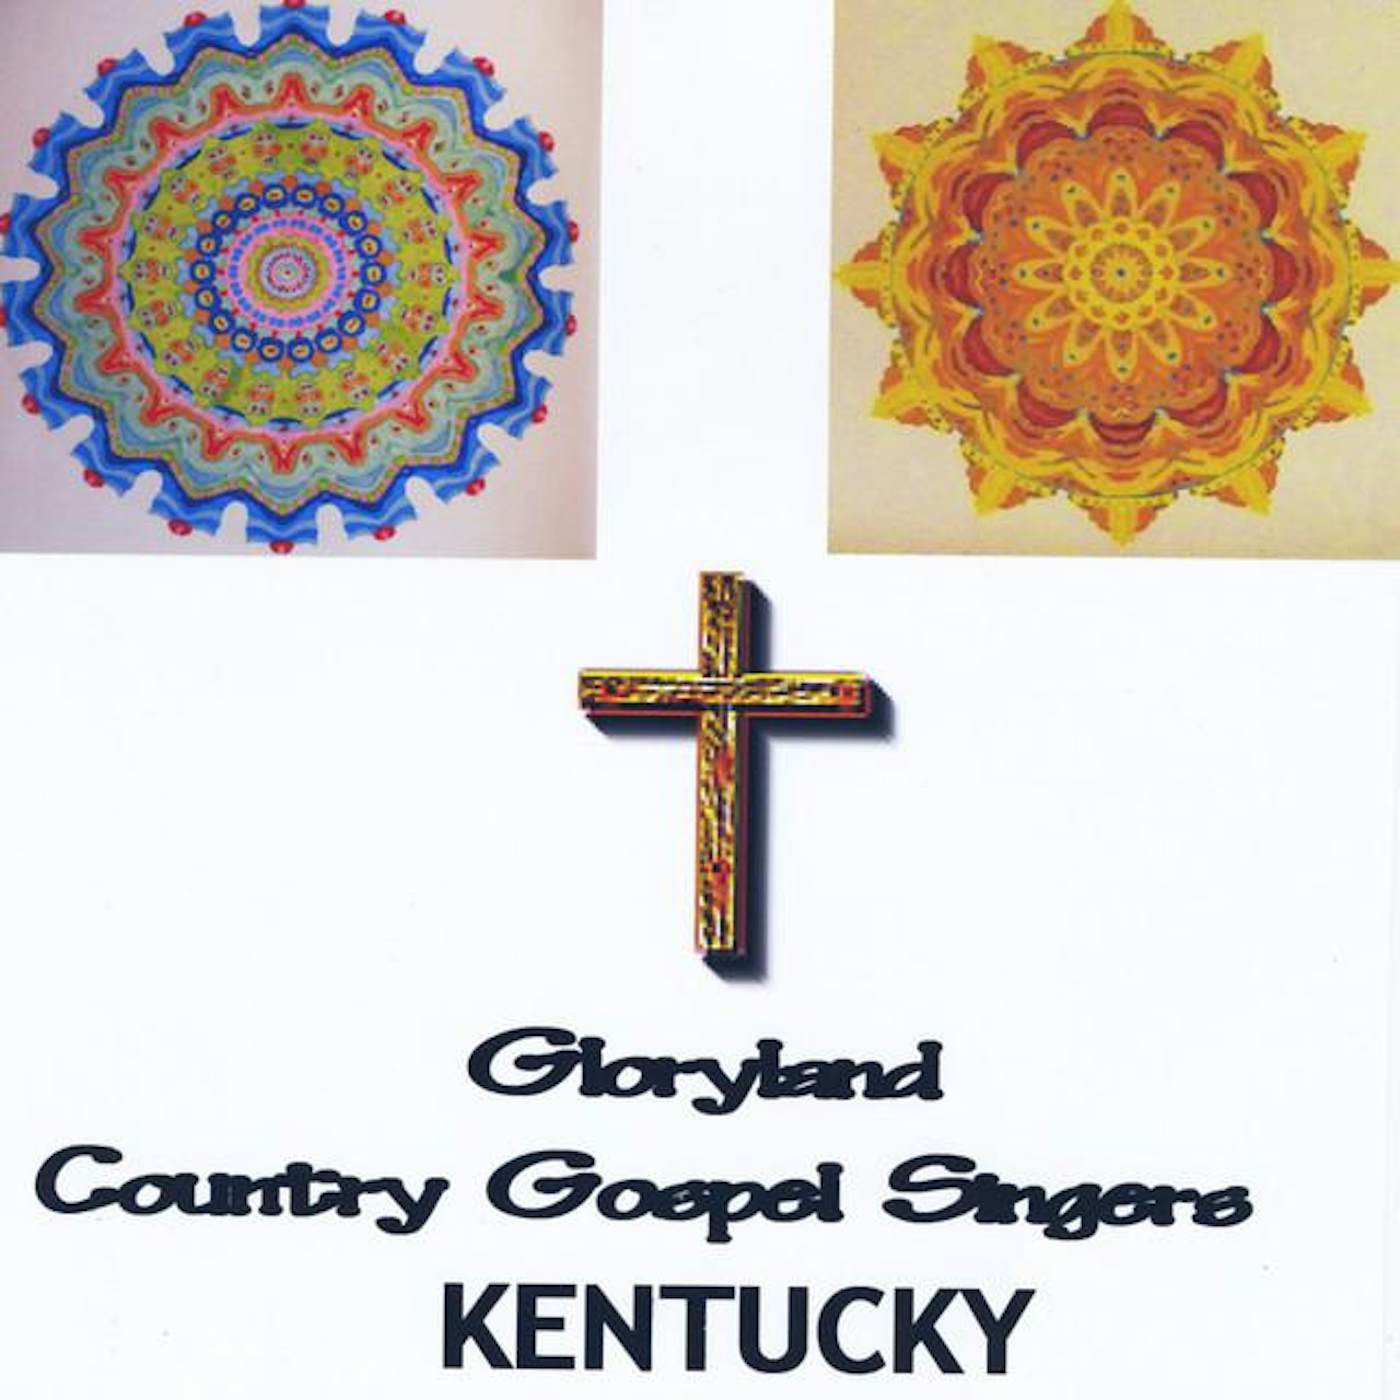 Gloryland Country Gospel Singers